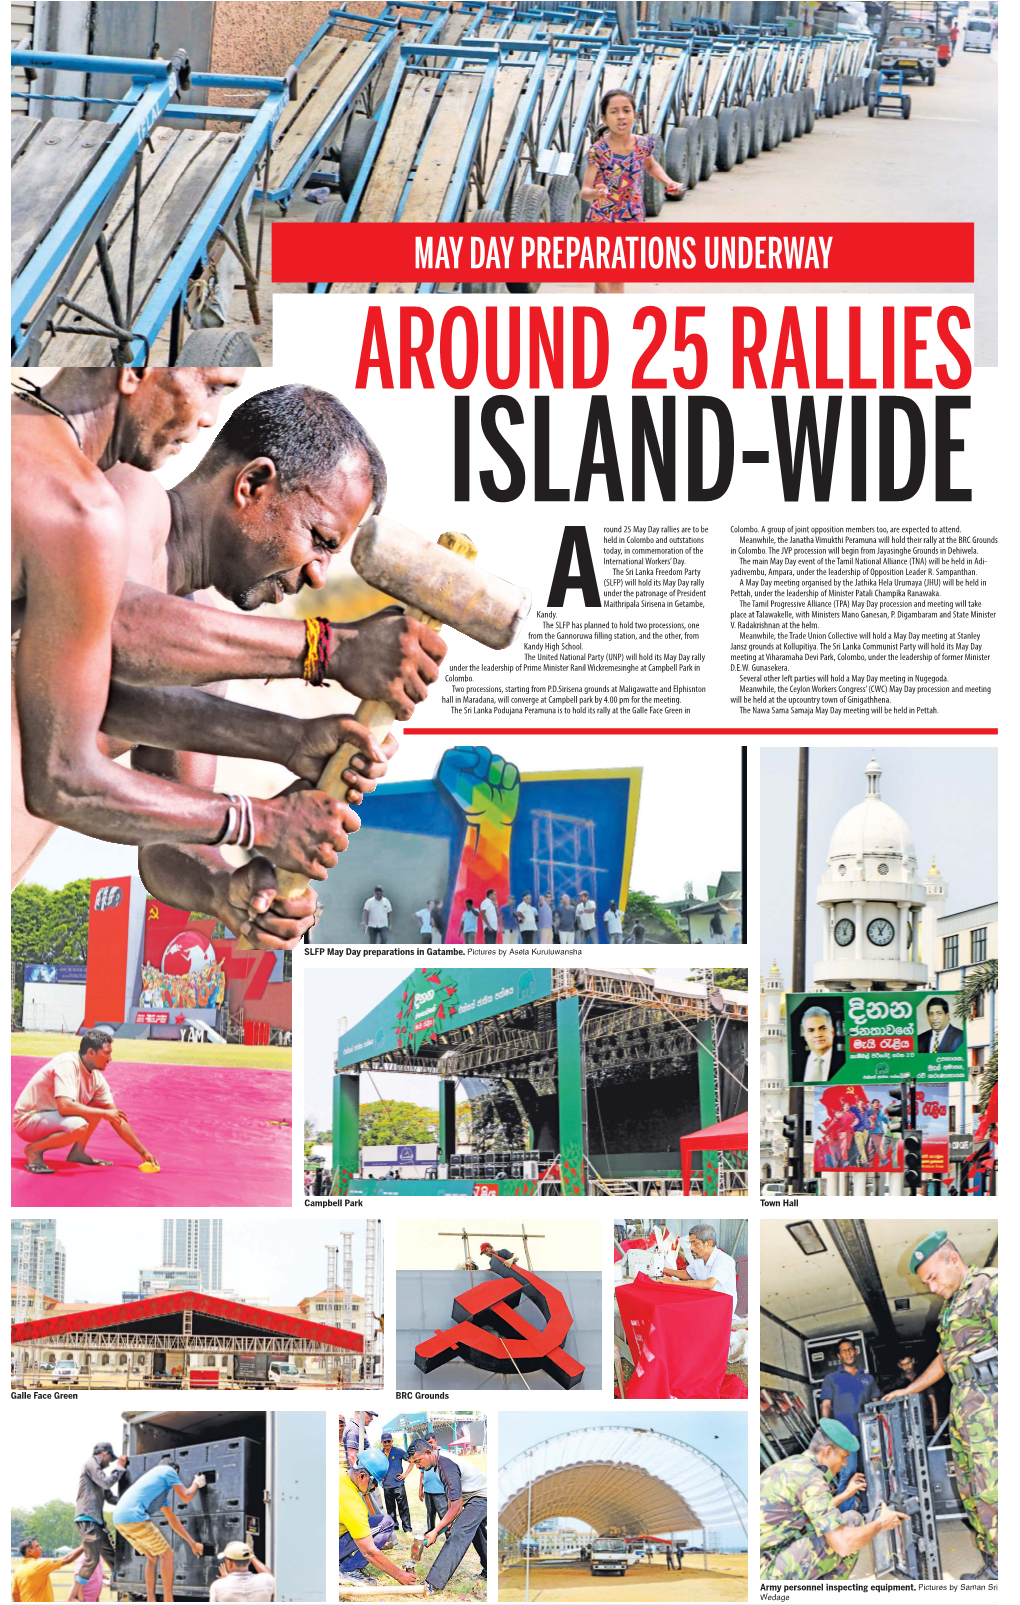 May Day Preparations Underway Around 25 Rallies Island-Wide